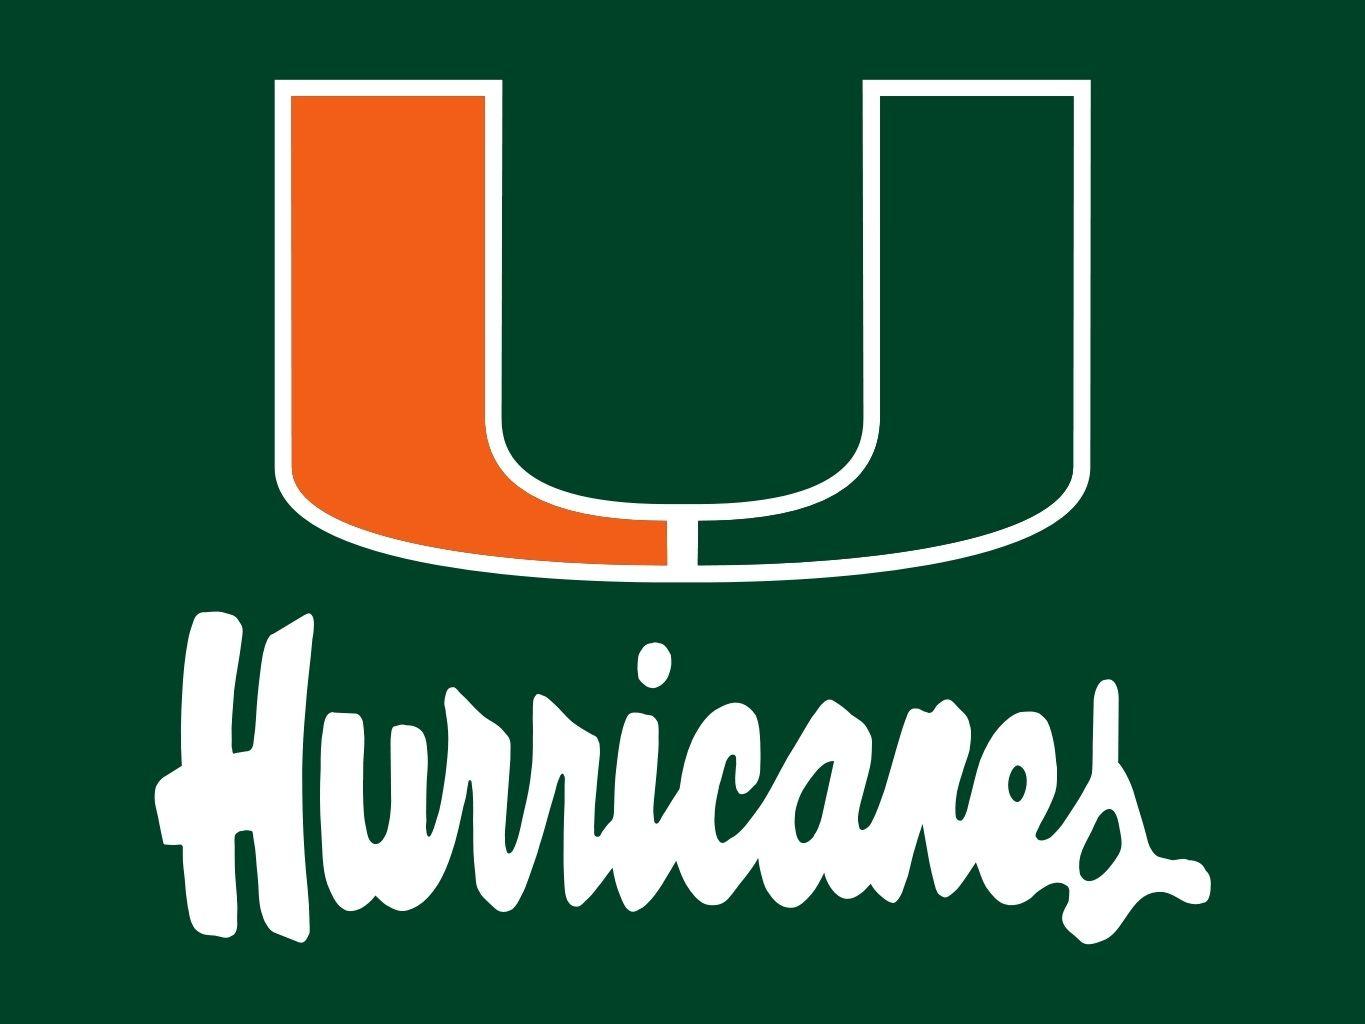 Miami Hurricanes Logo - Miami investigation lawyer says she's a 'patsy' | Miami Hurricanes ...